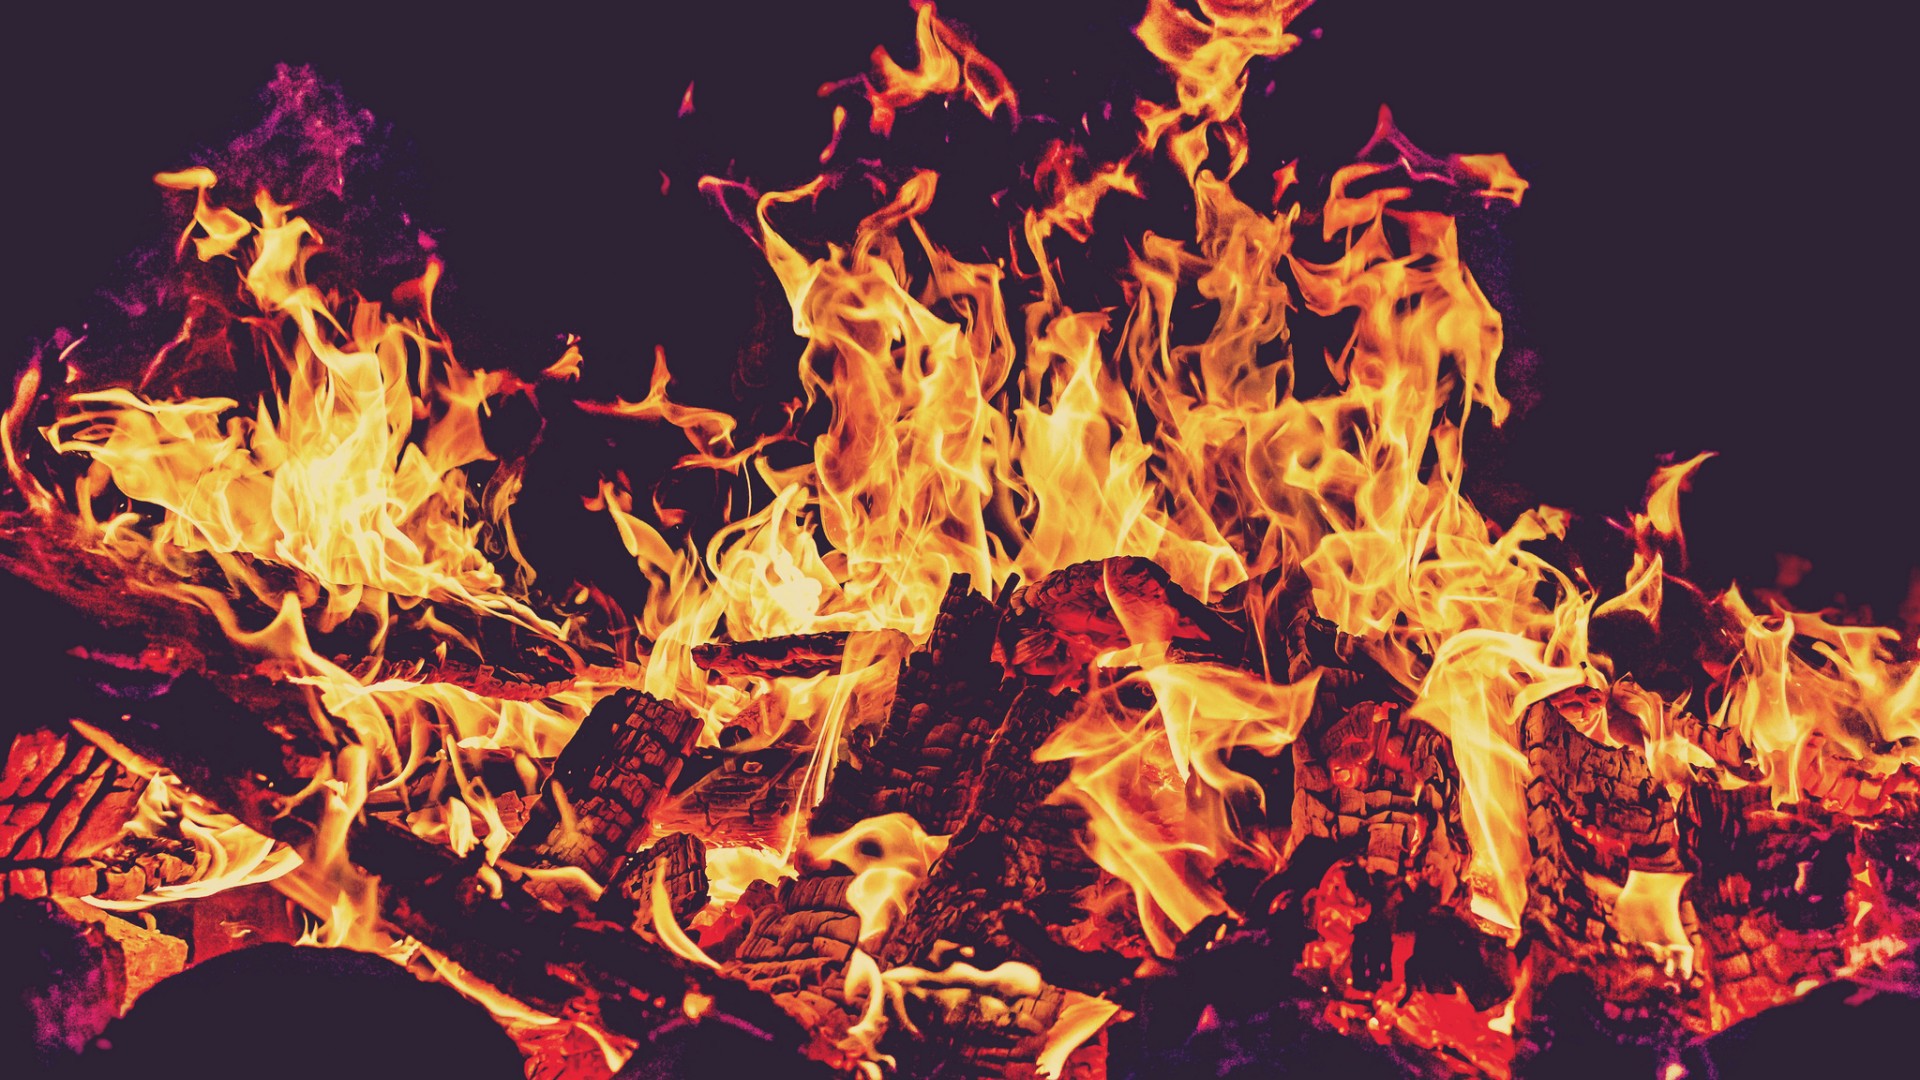 Flames Of A Bonfire Wallpaper And Image